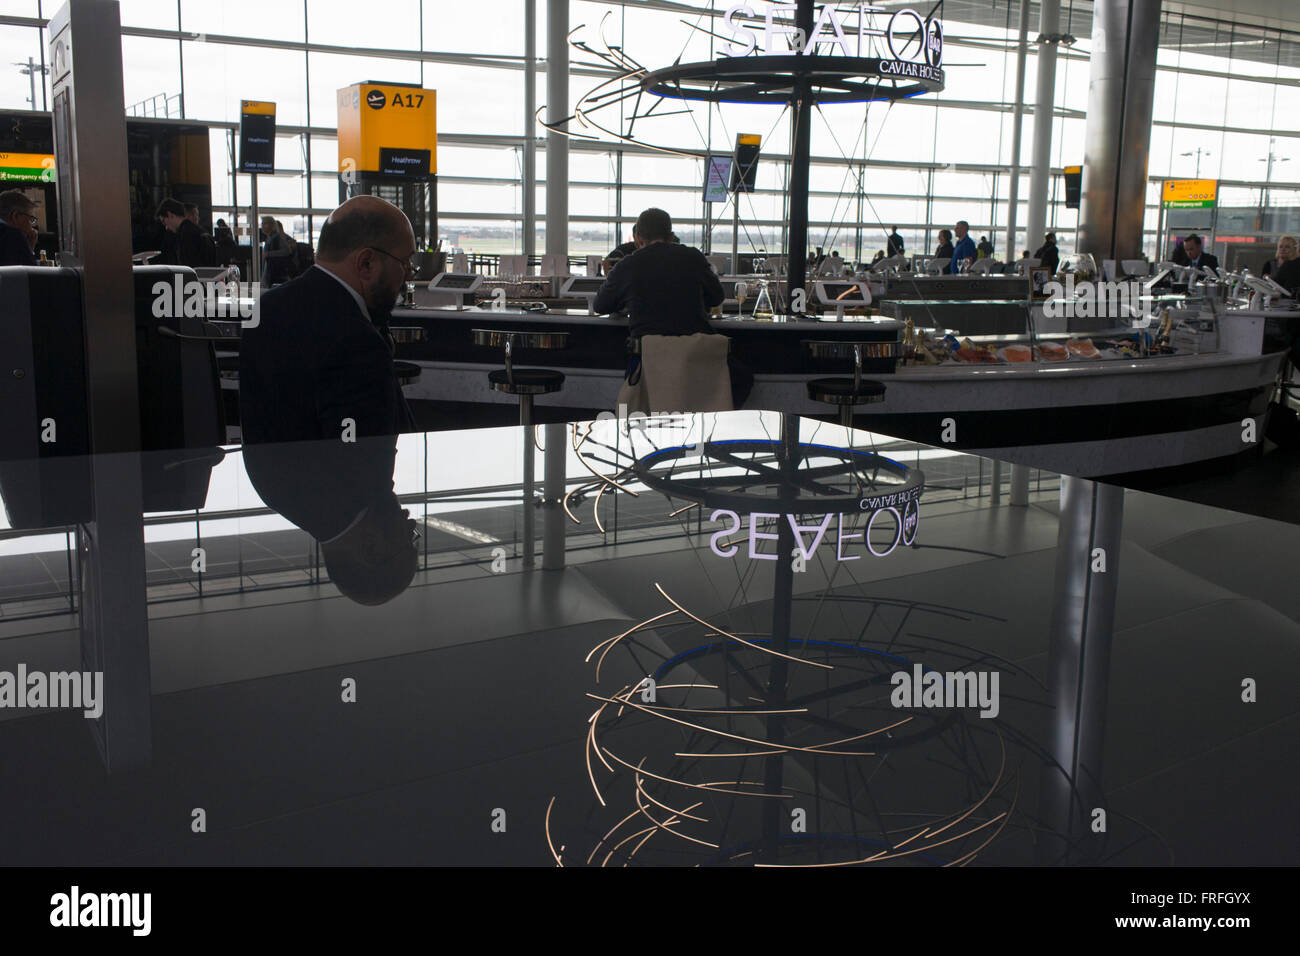 Passengers and Heathrow airport terminal 2 design. Stock Photo